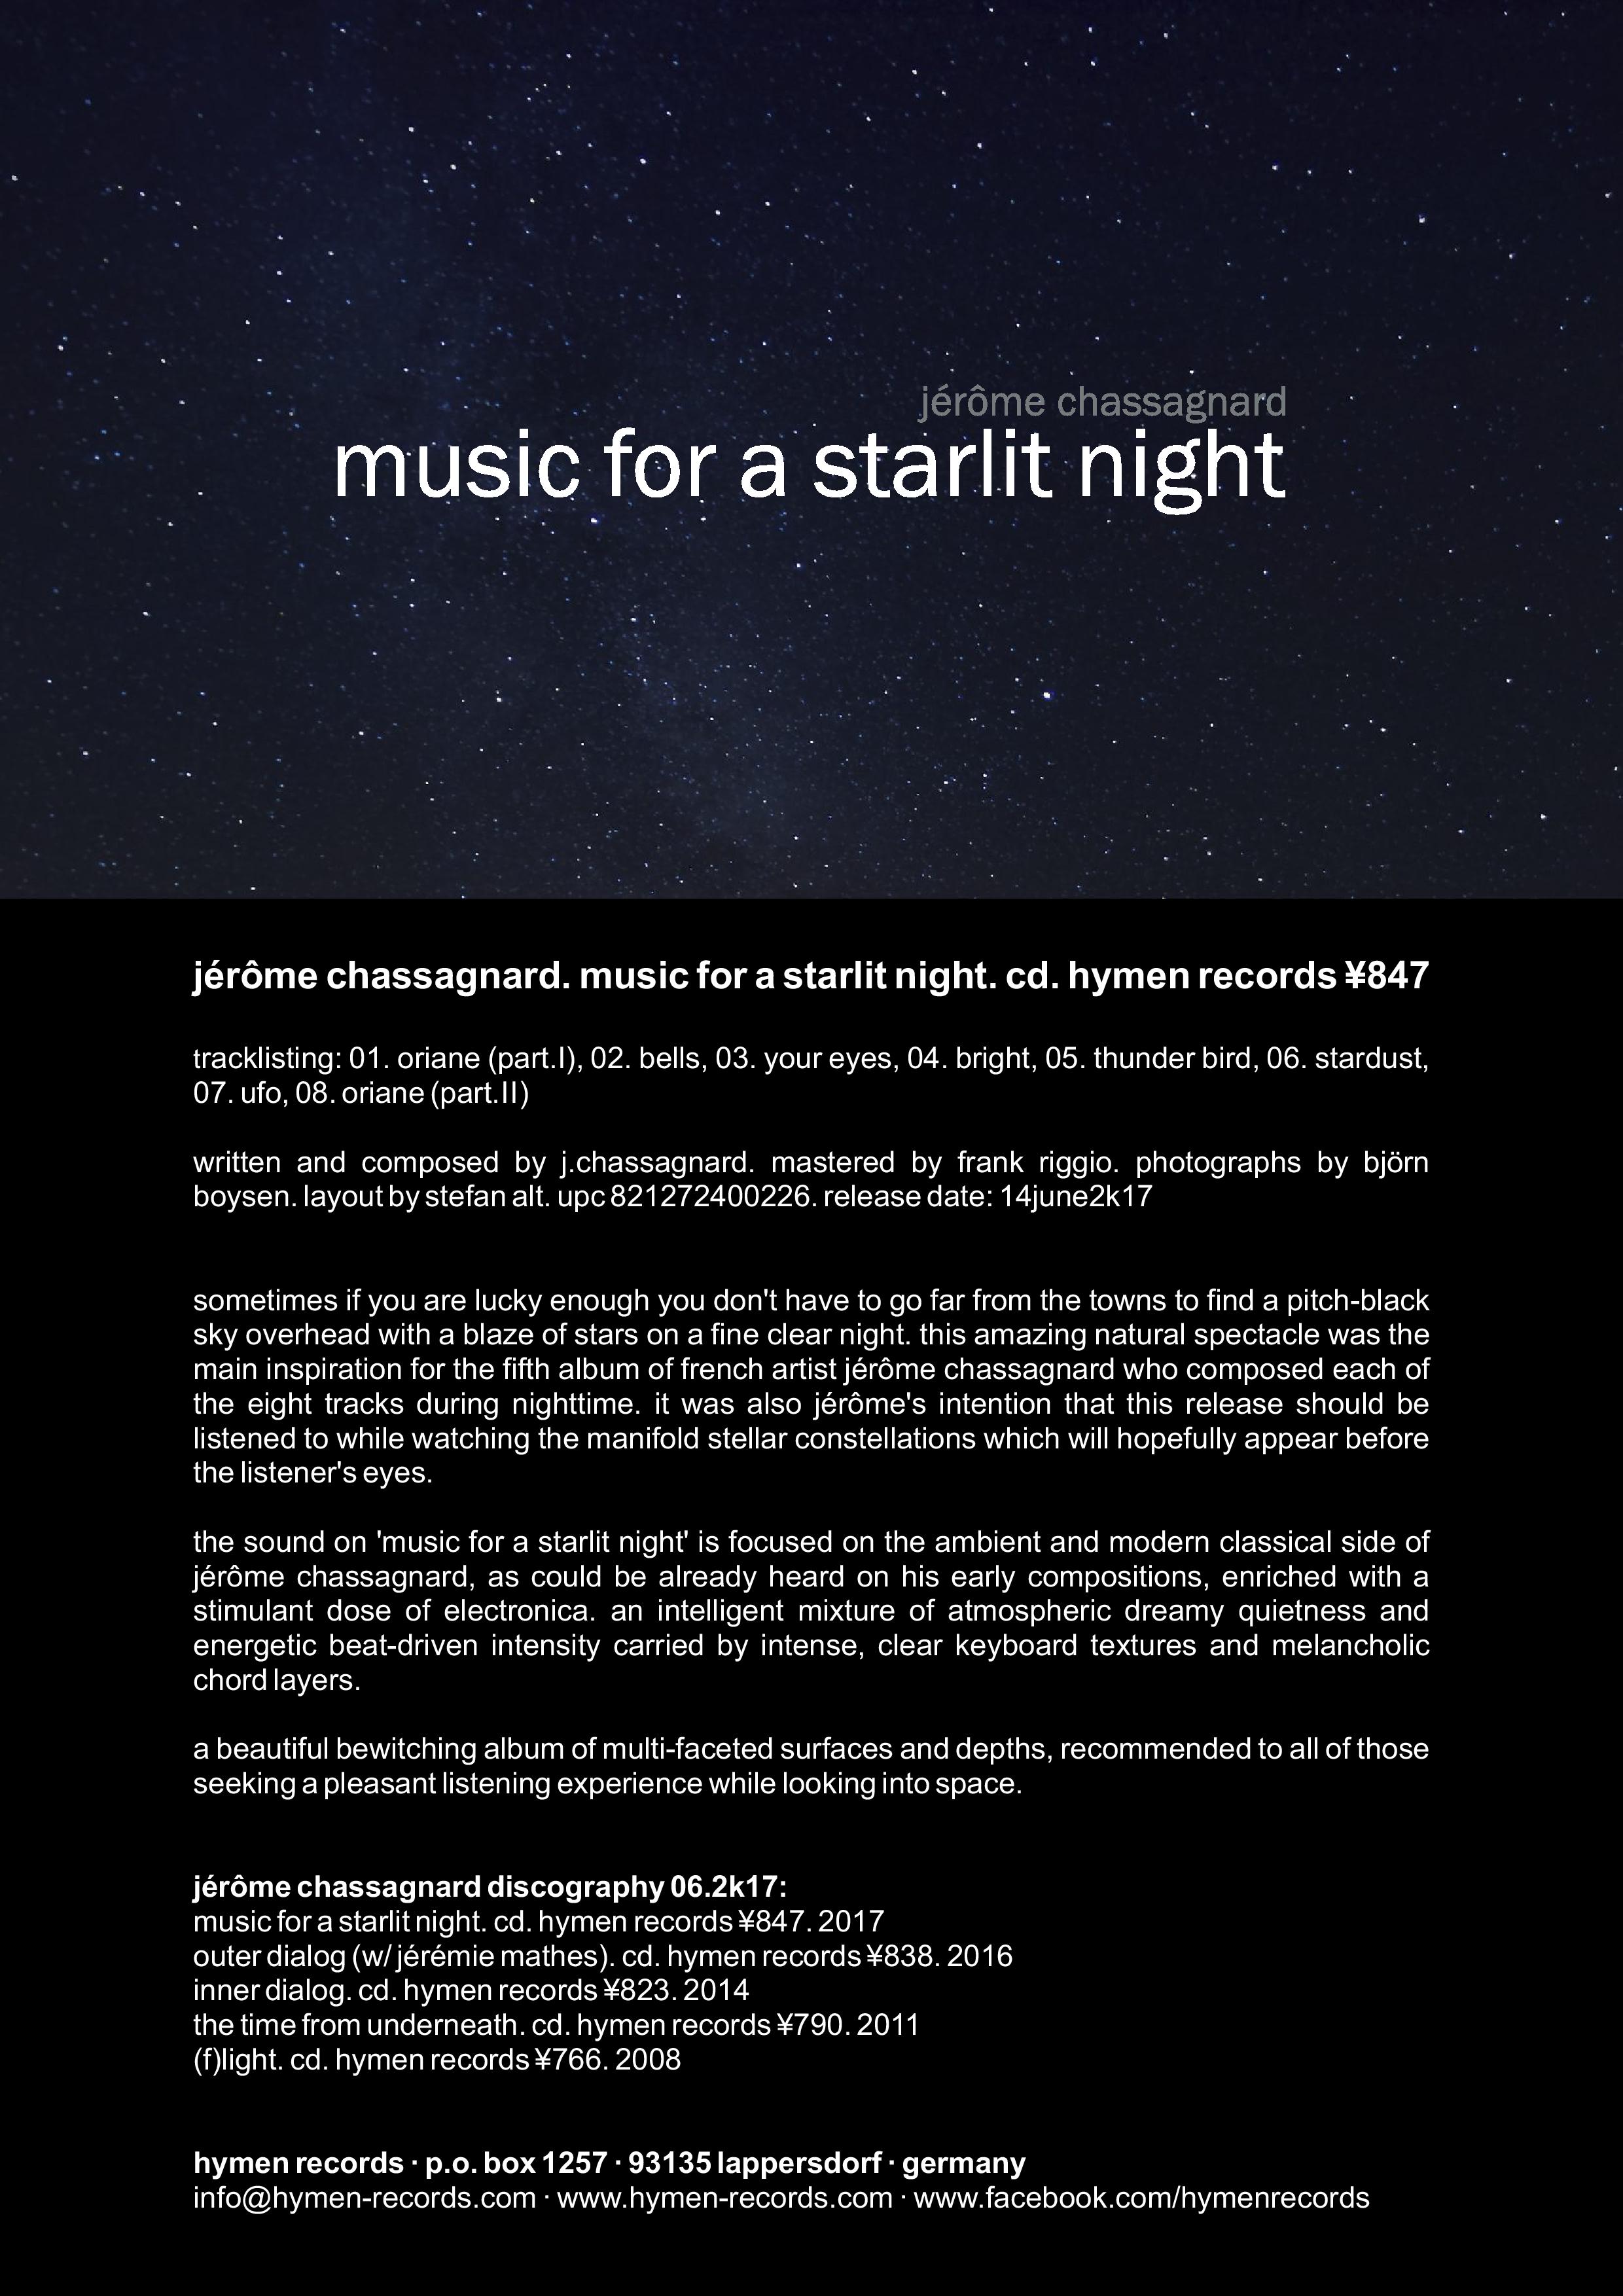 GFer2XRhmkA_Y847-info---jerome-chassagnard.-music-for-a-starlit-night-page-001.jpg